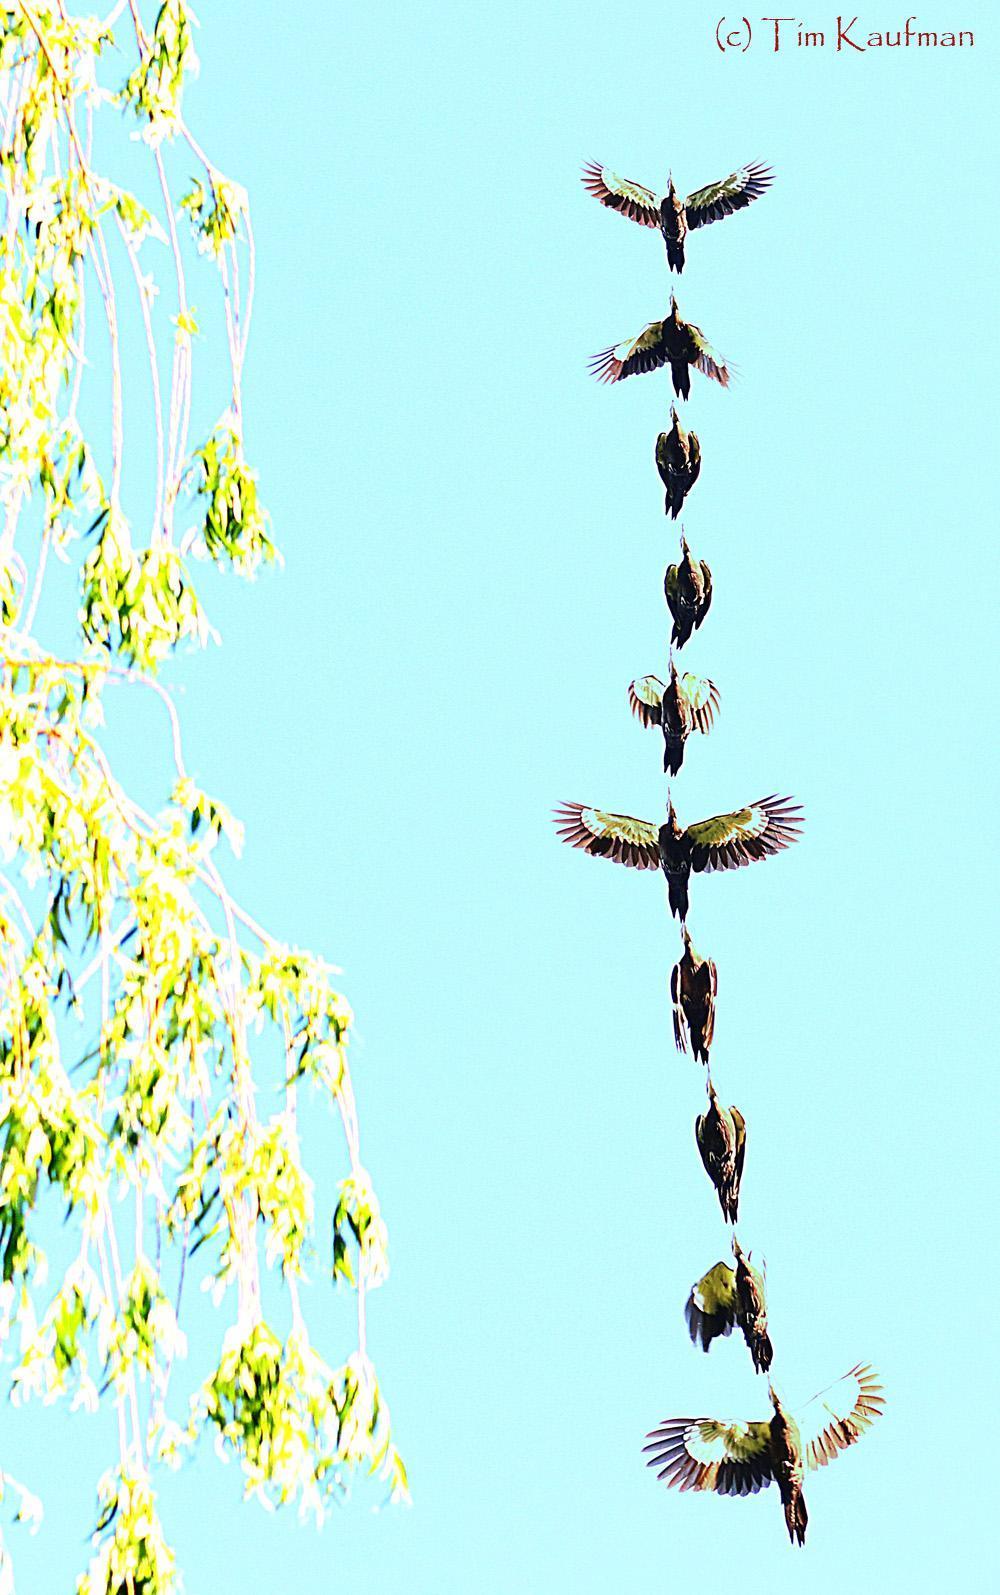 Pileated Woodpecker Photo by Tim Kaufman